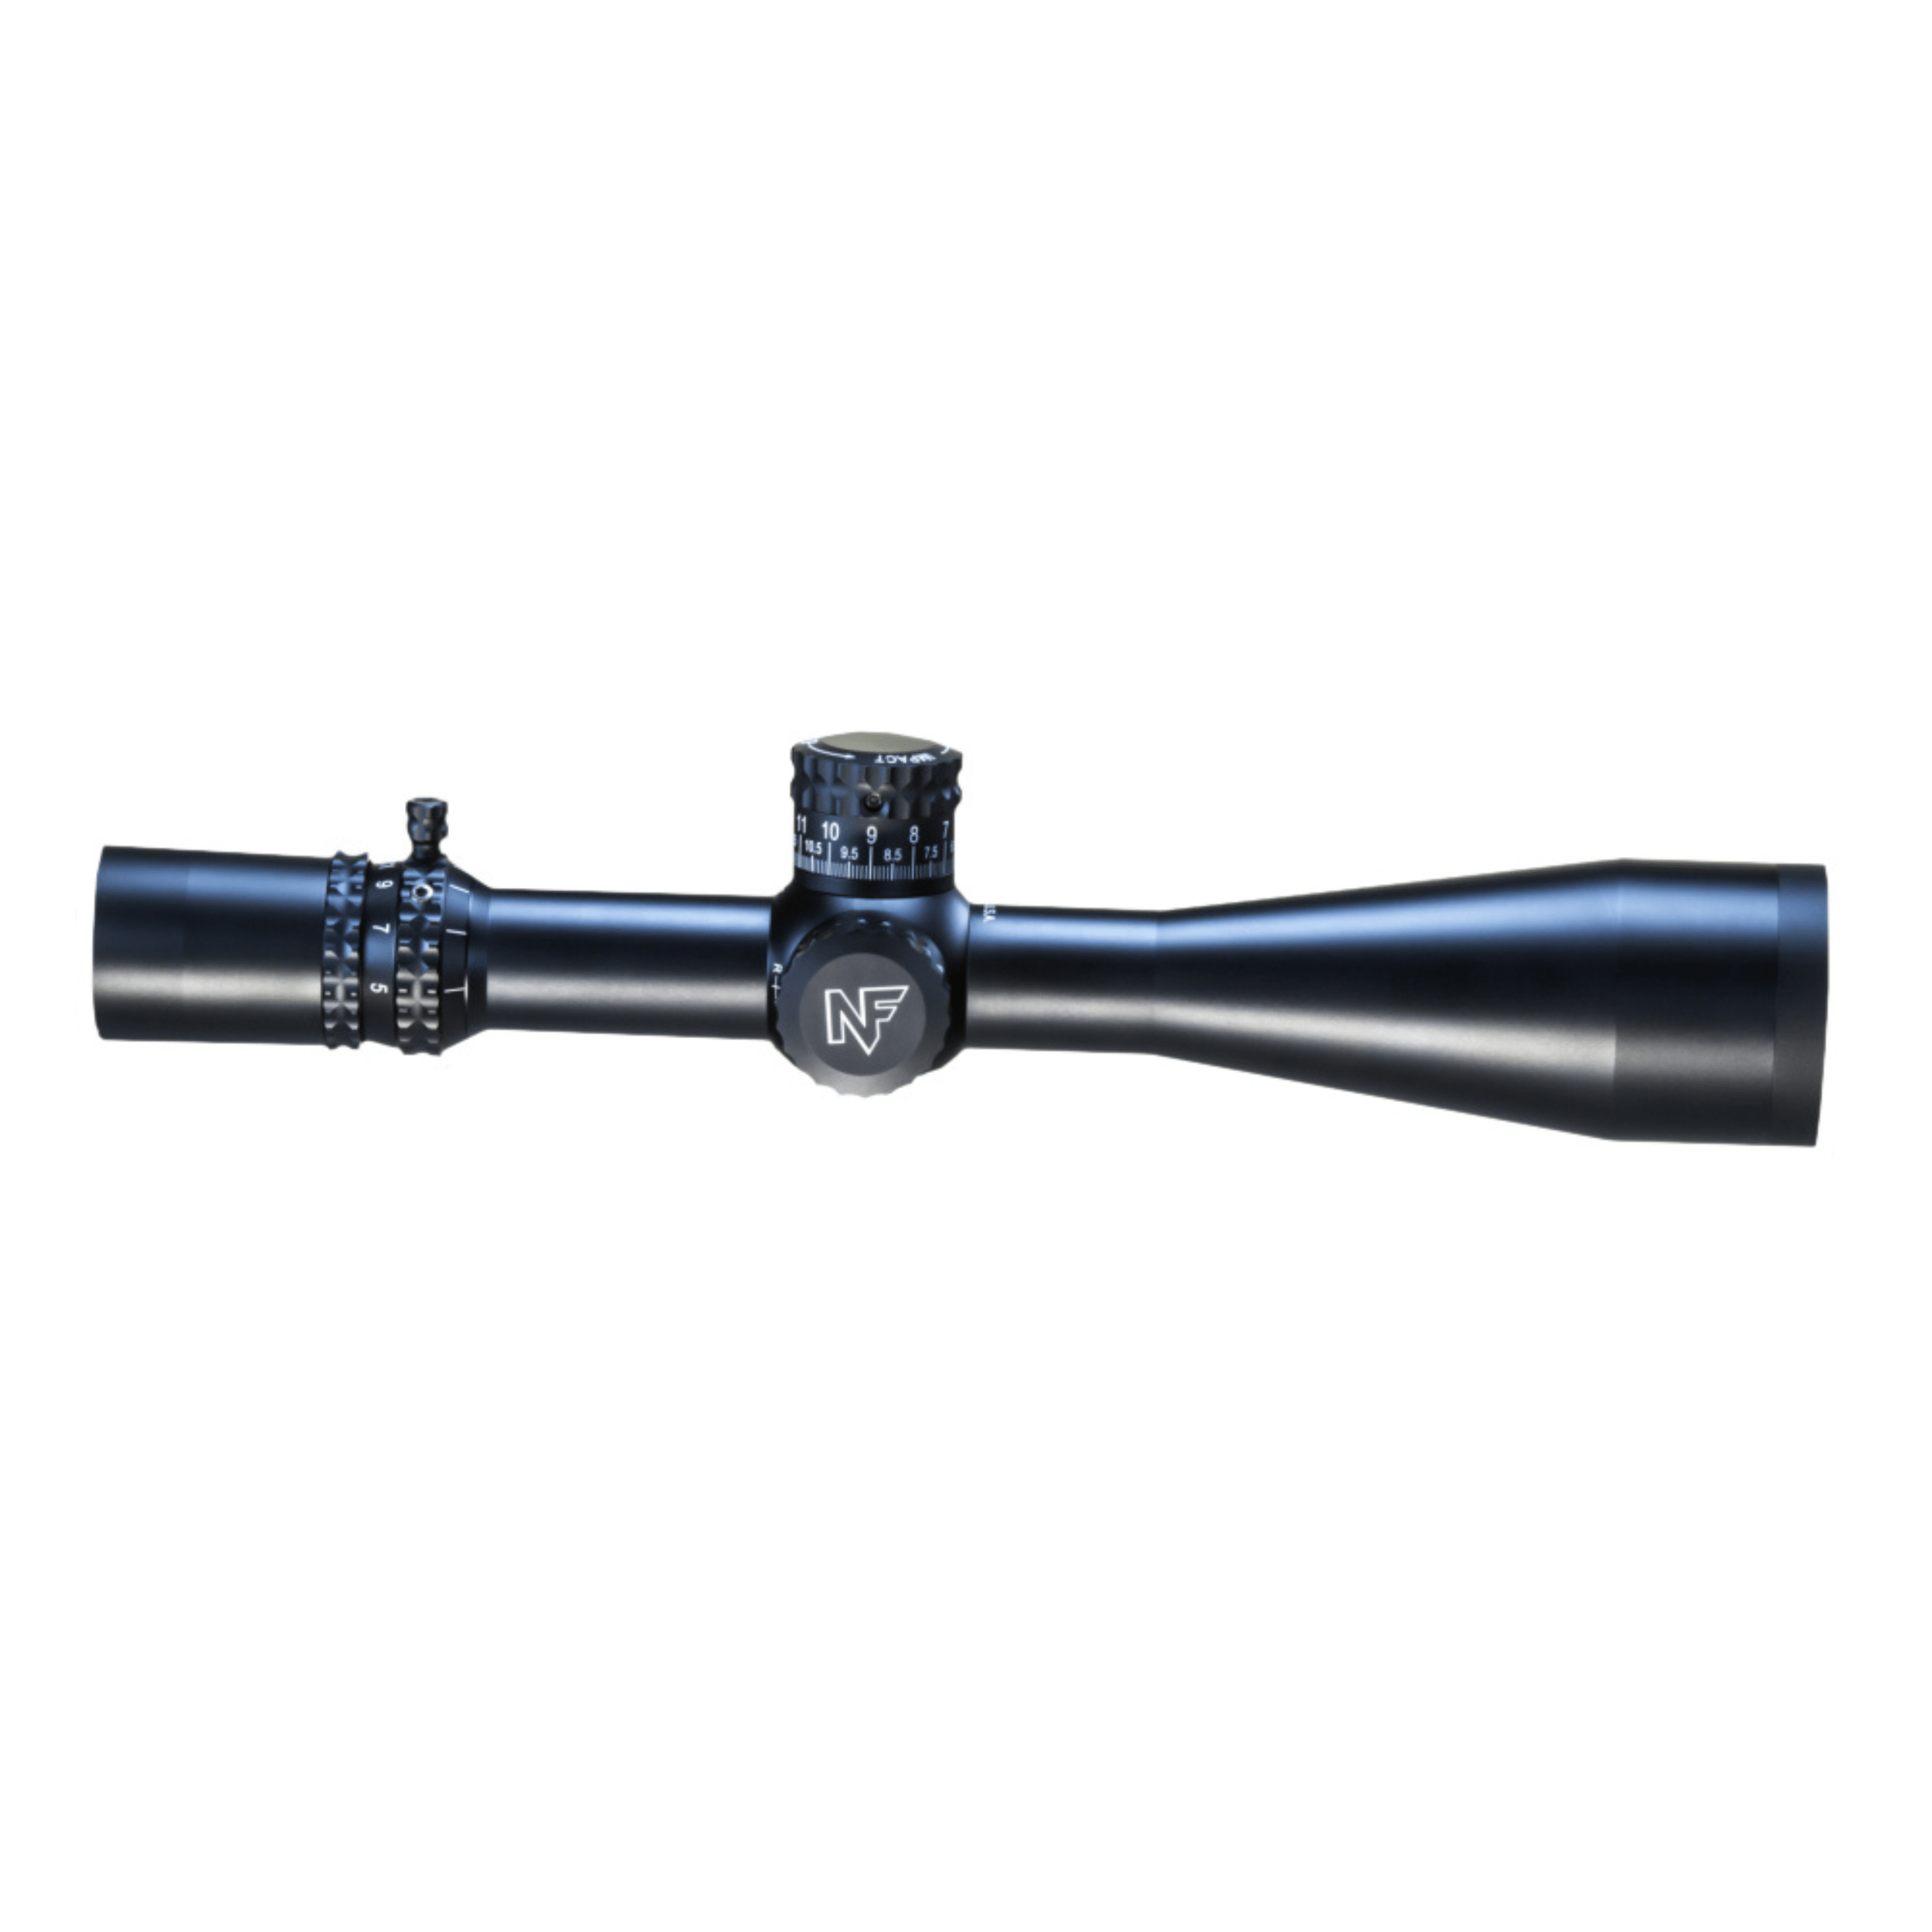 ATACR – 5-25x56mm F1